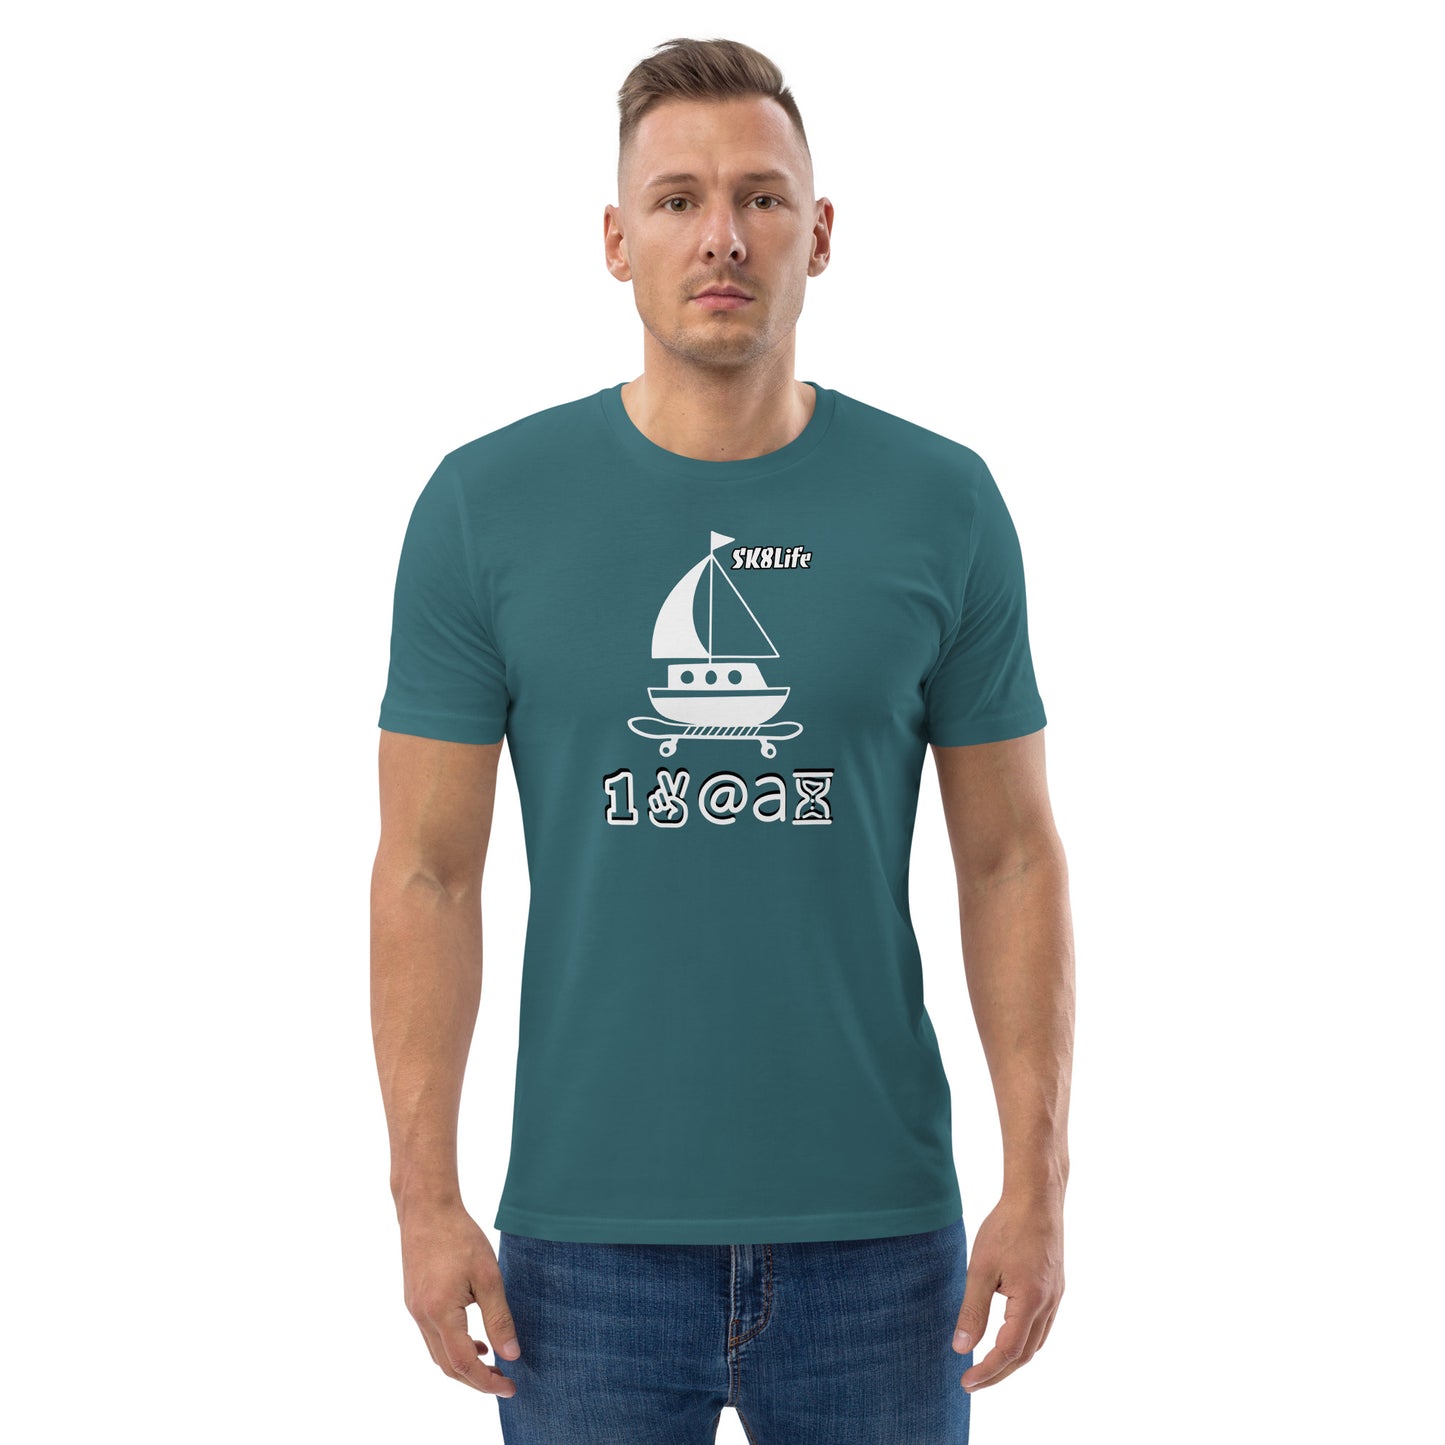 Unisex organic cotton t-shirt "SK8/Sail thru Life"